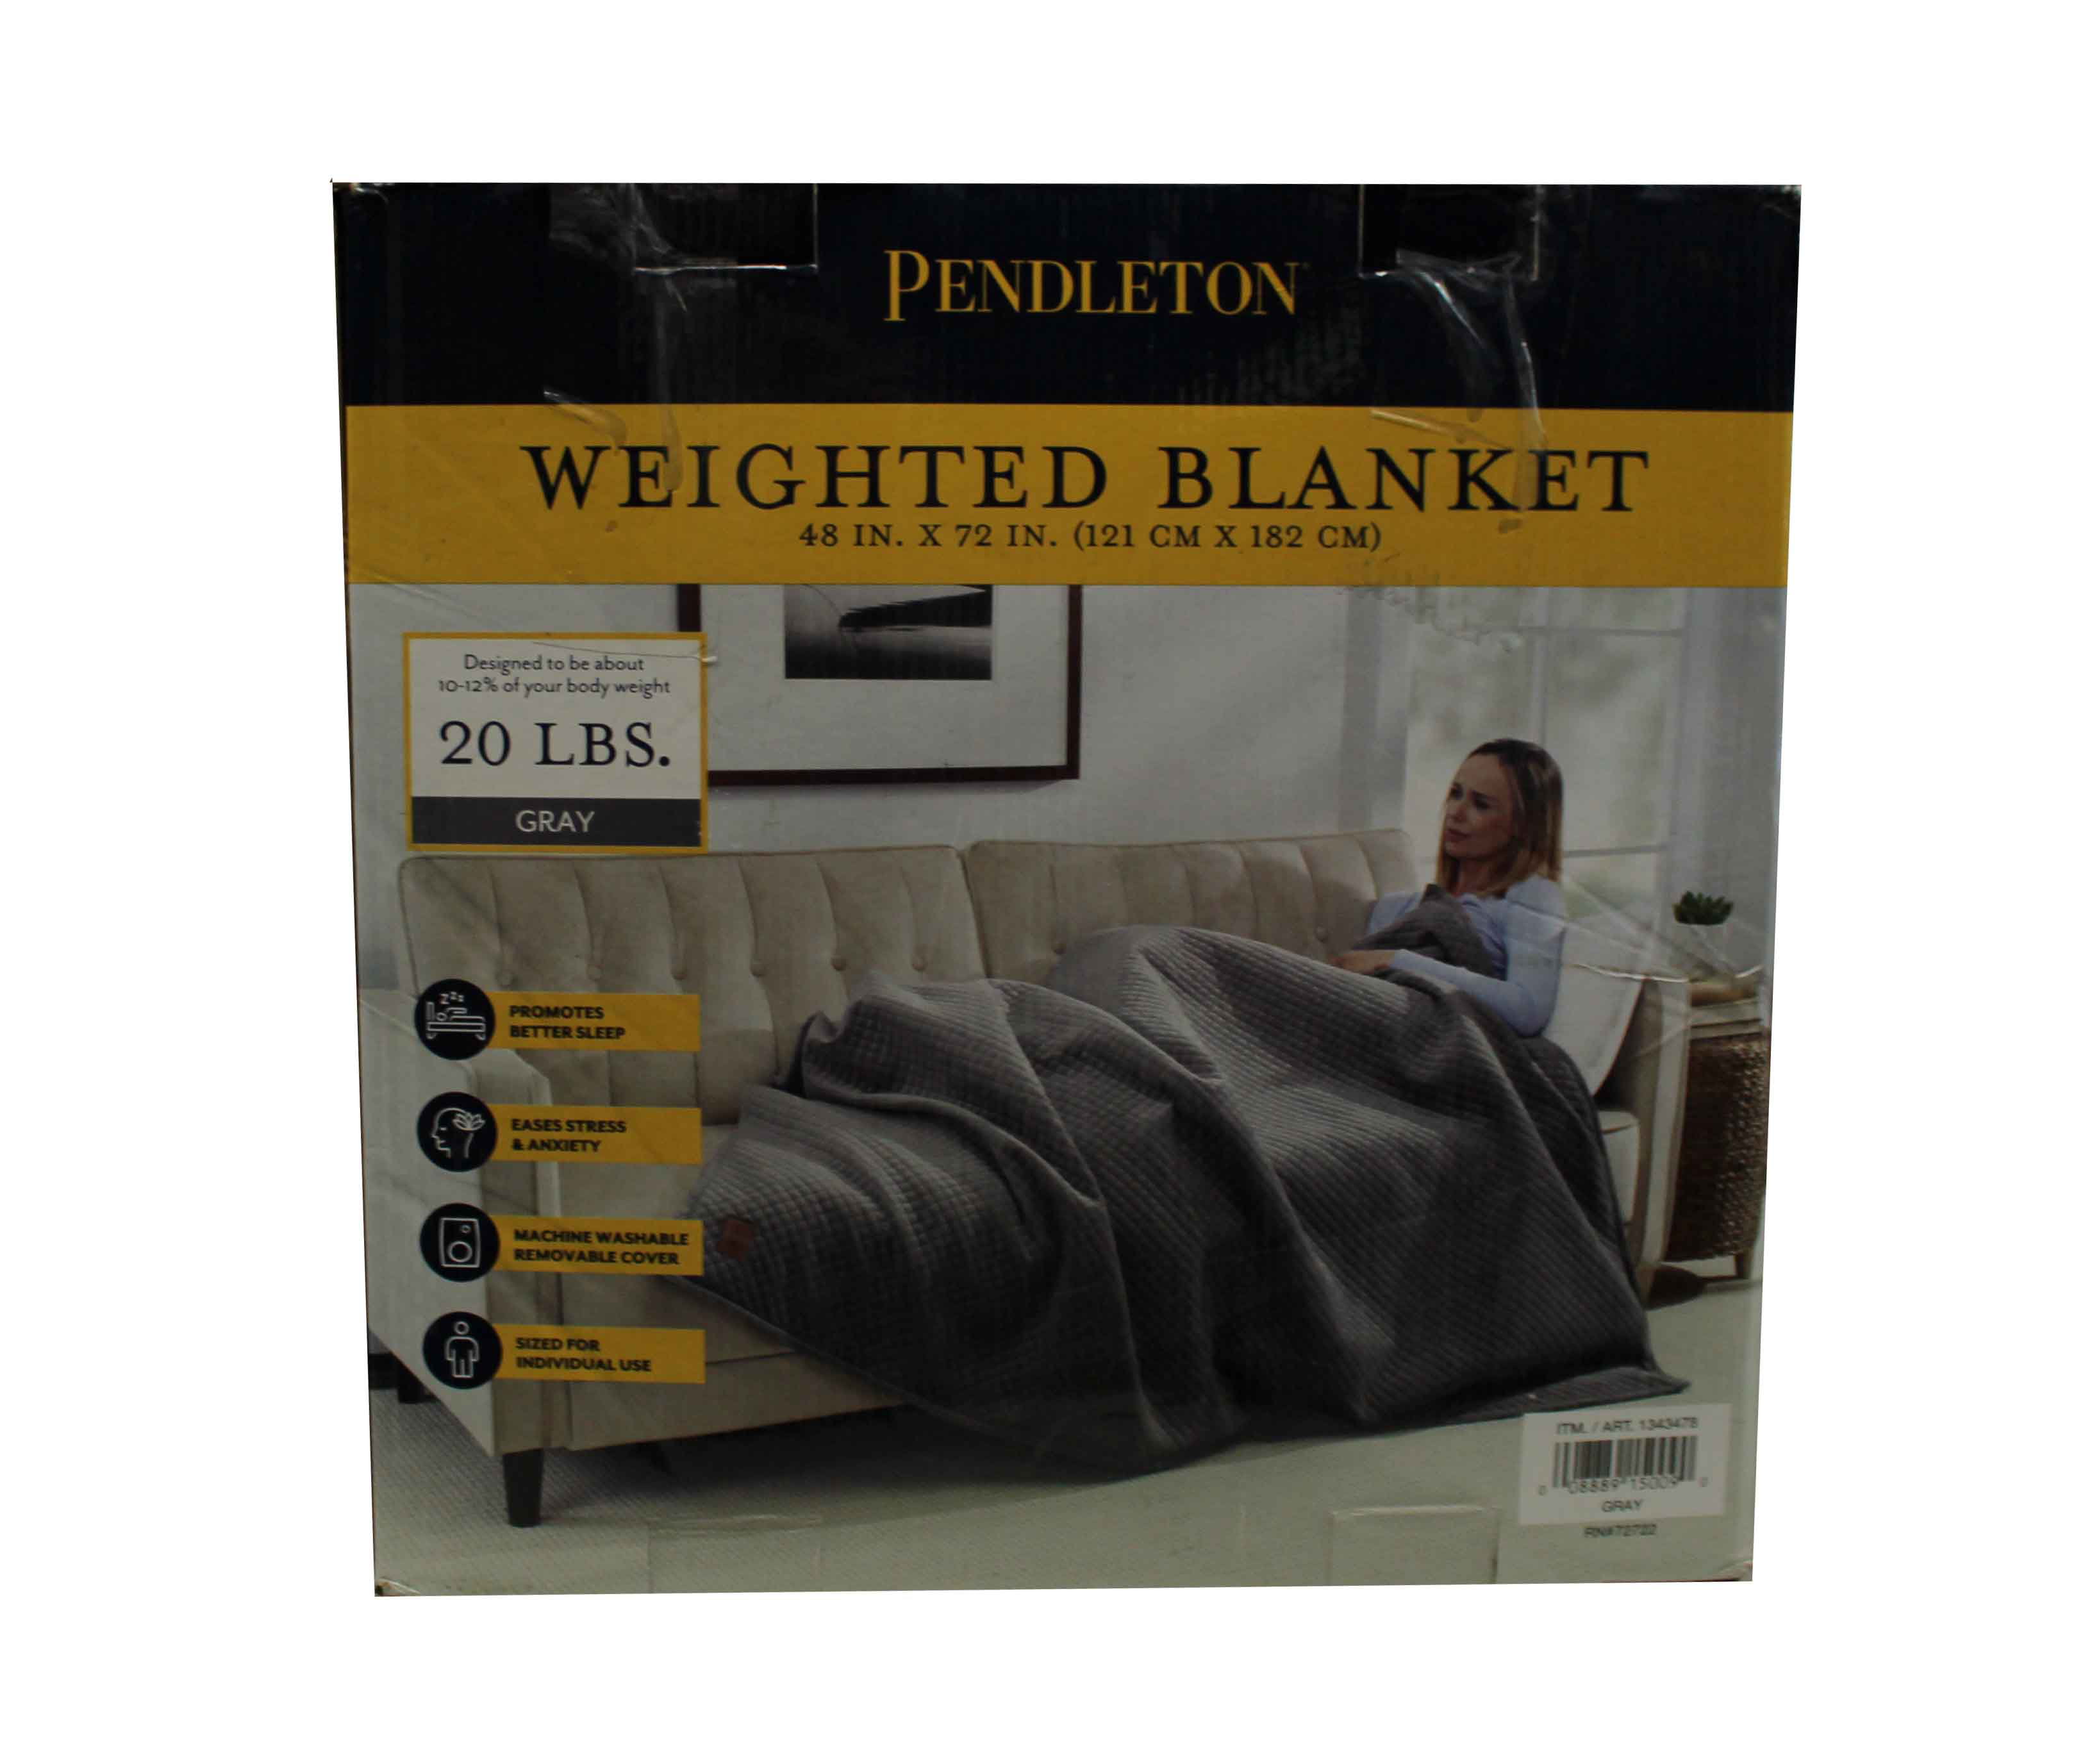 Pendleton Weighted Blanket Gray 48" X 72" (20 lbs.) - Walmart.com